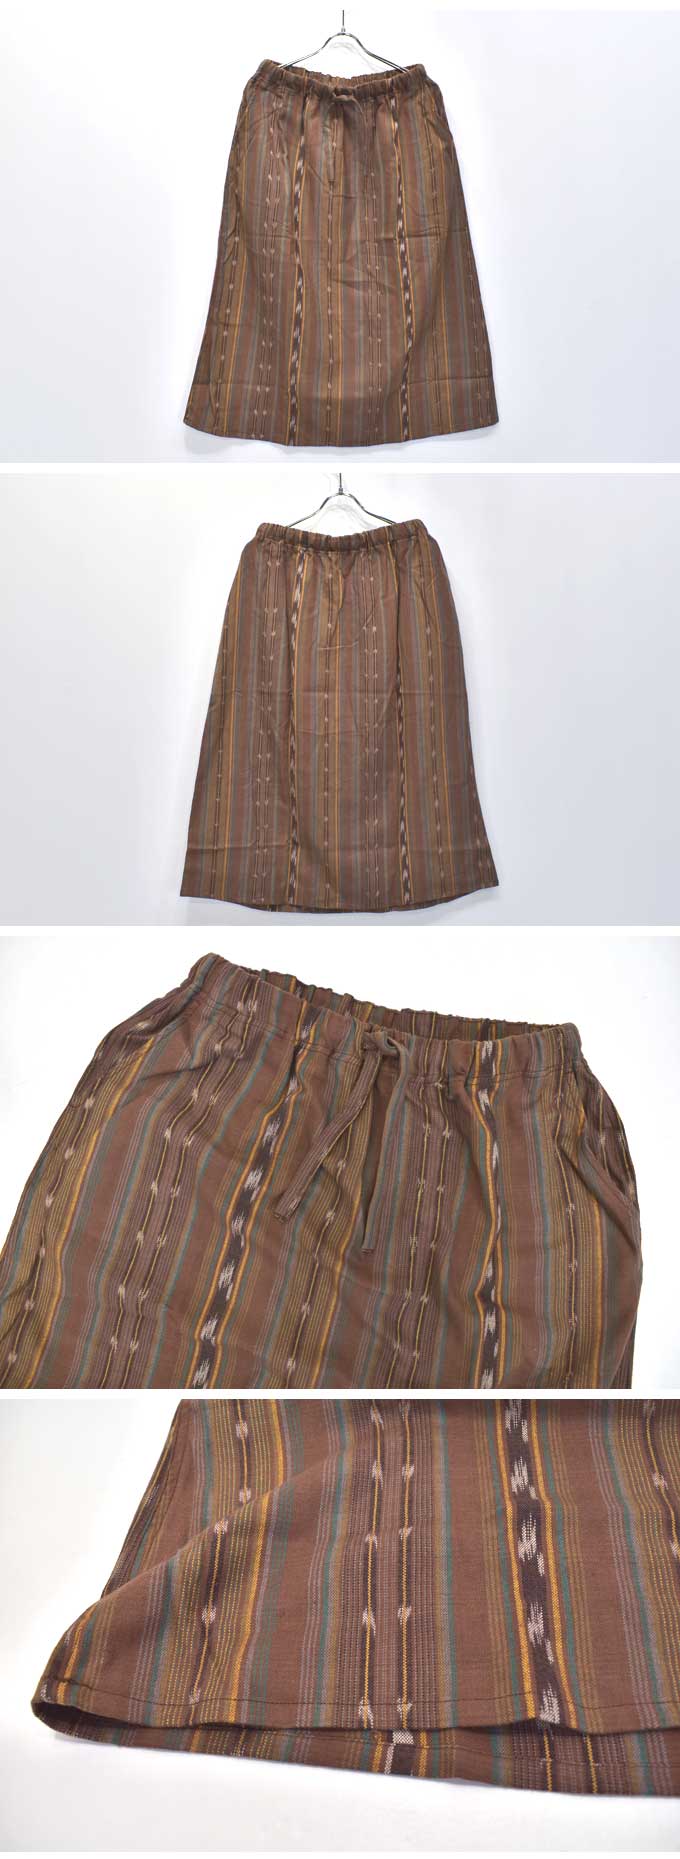 South2 West8 String Skirt (Cotton Cloth/Ikat Pattern)【返品・交換不可】 